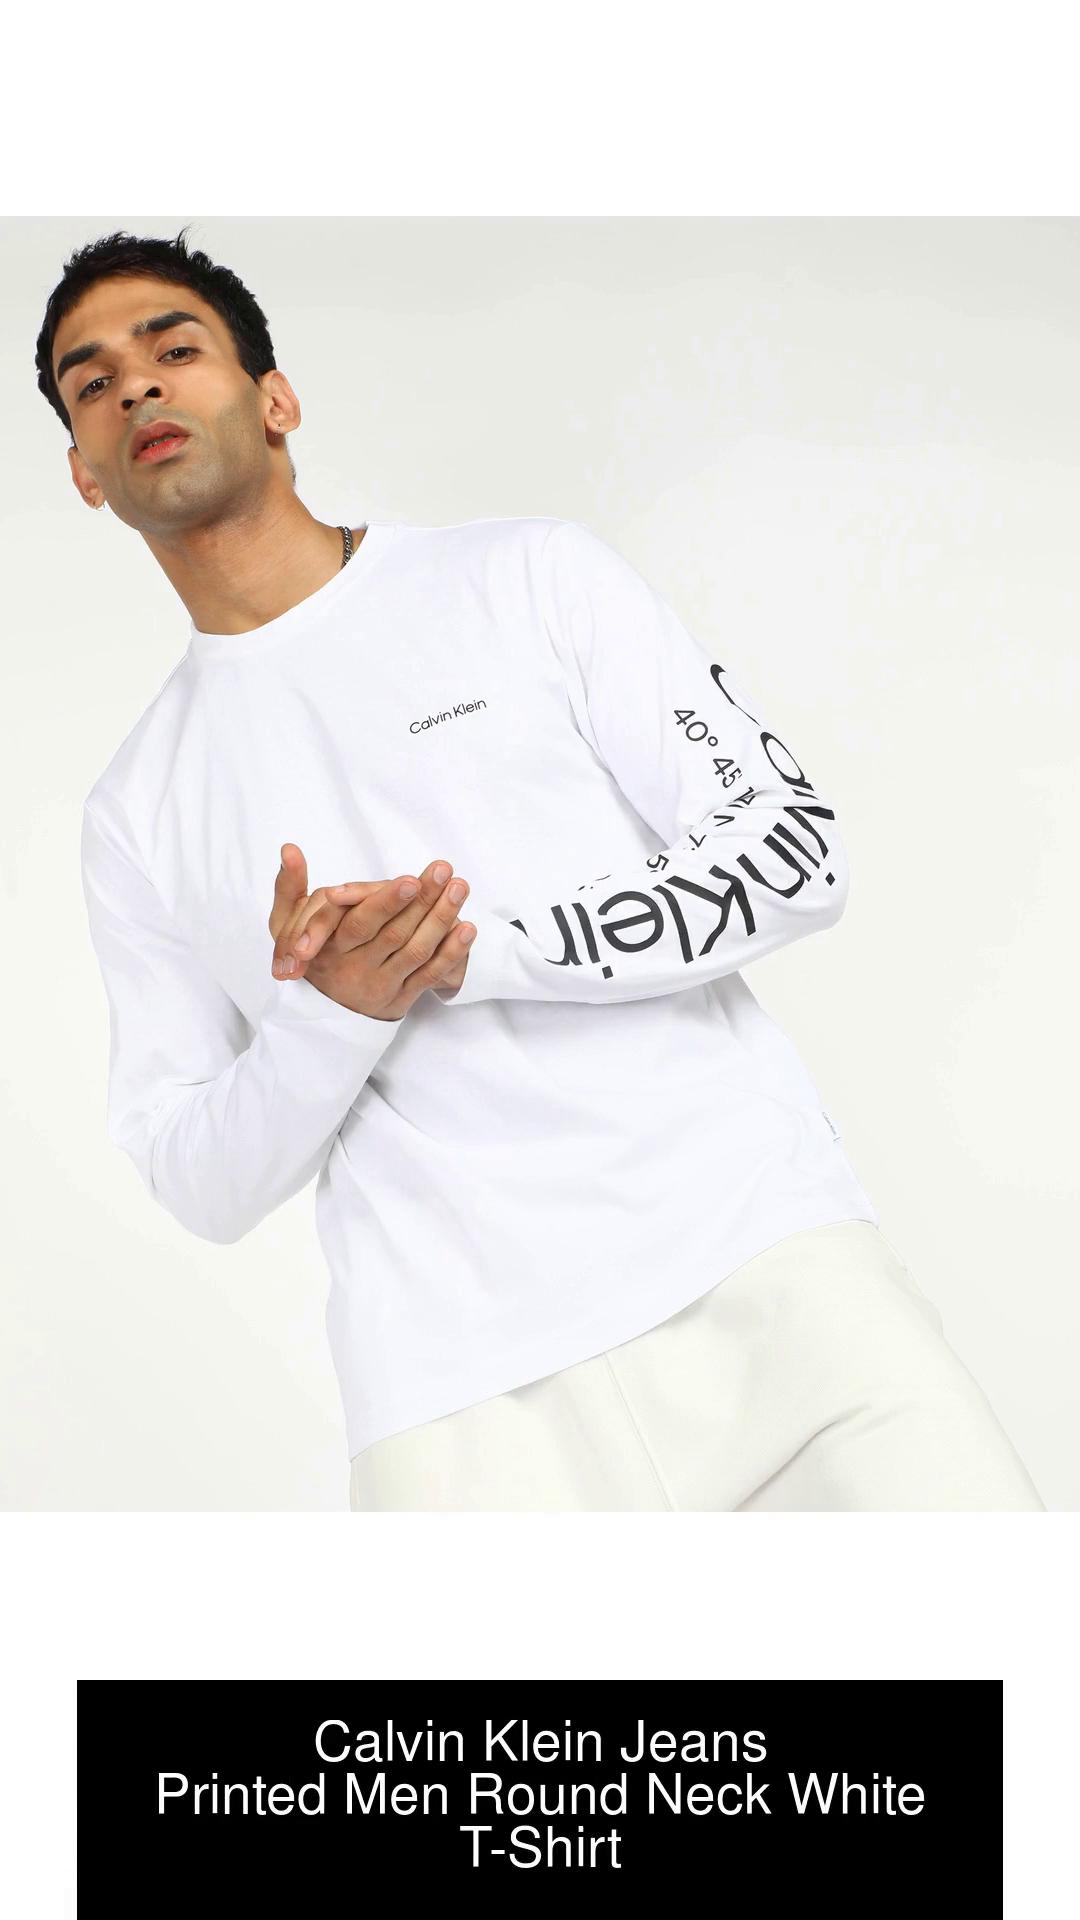 Calvin Klein Jeans Printed Men Round Neck White T-Shirt - Buy